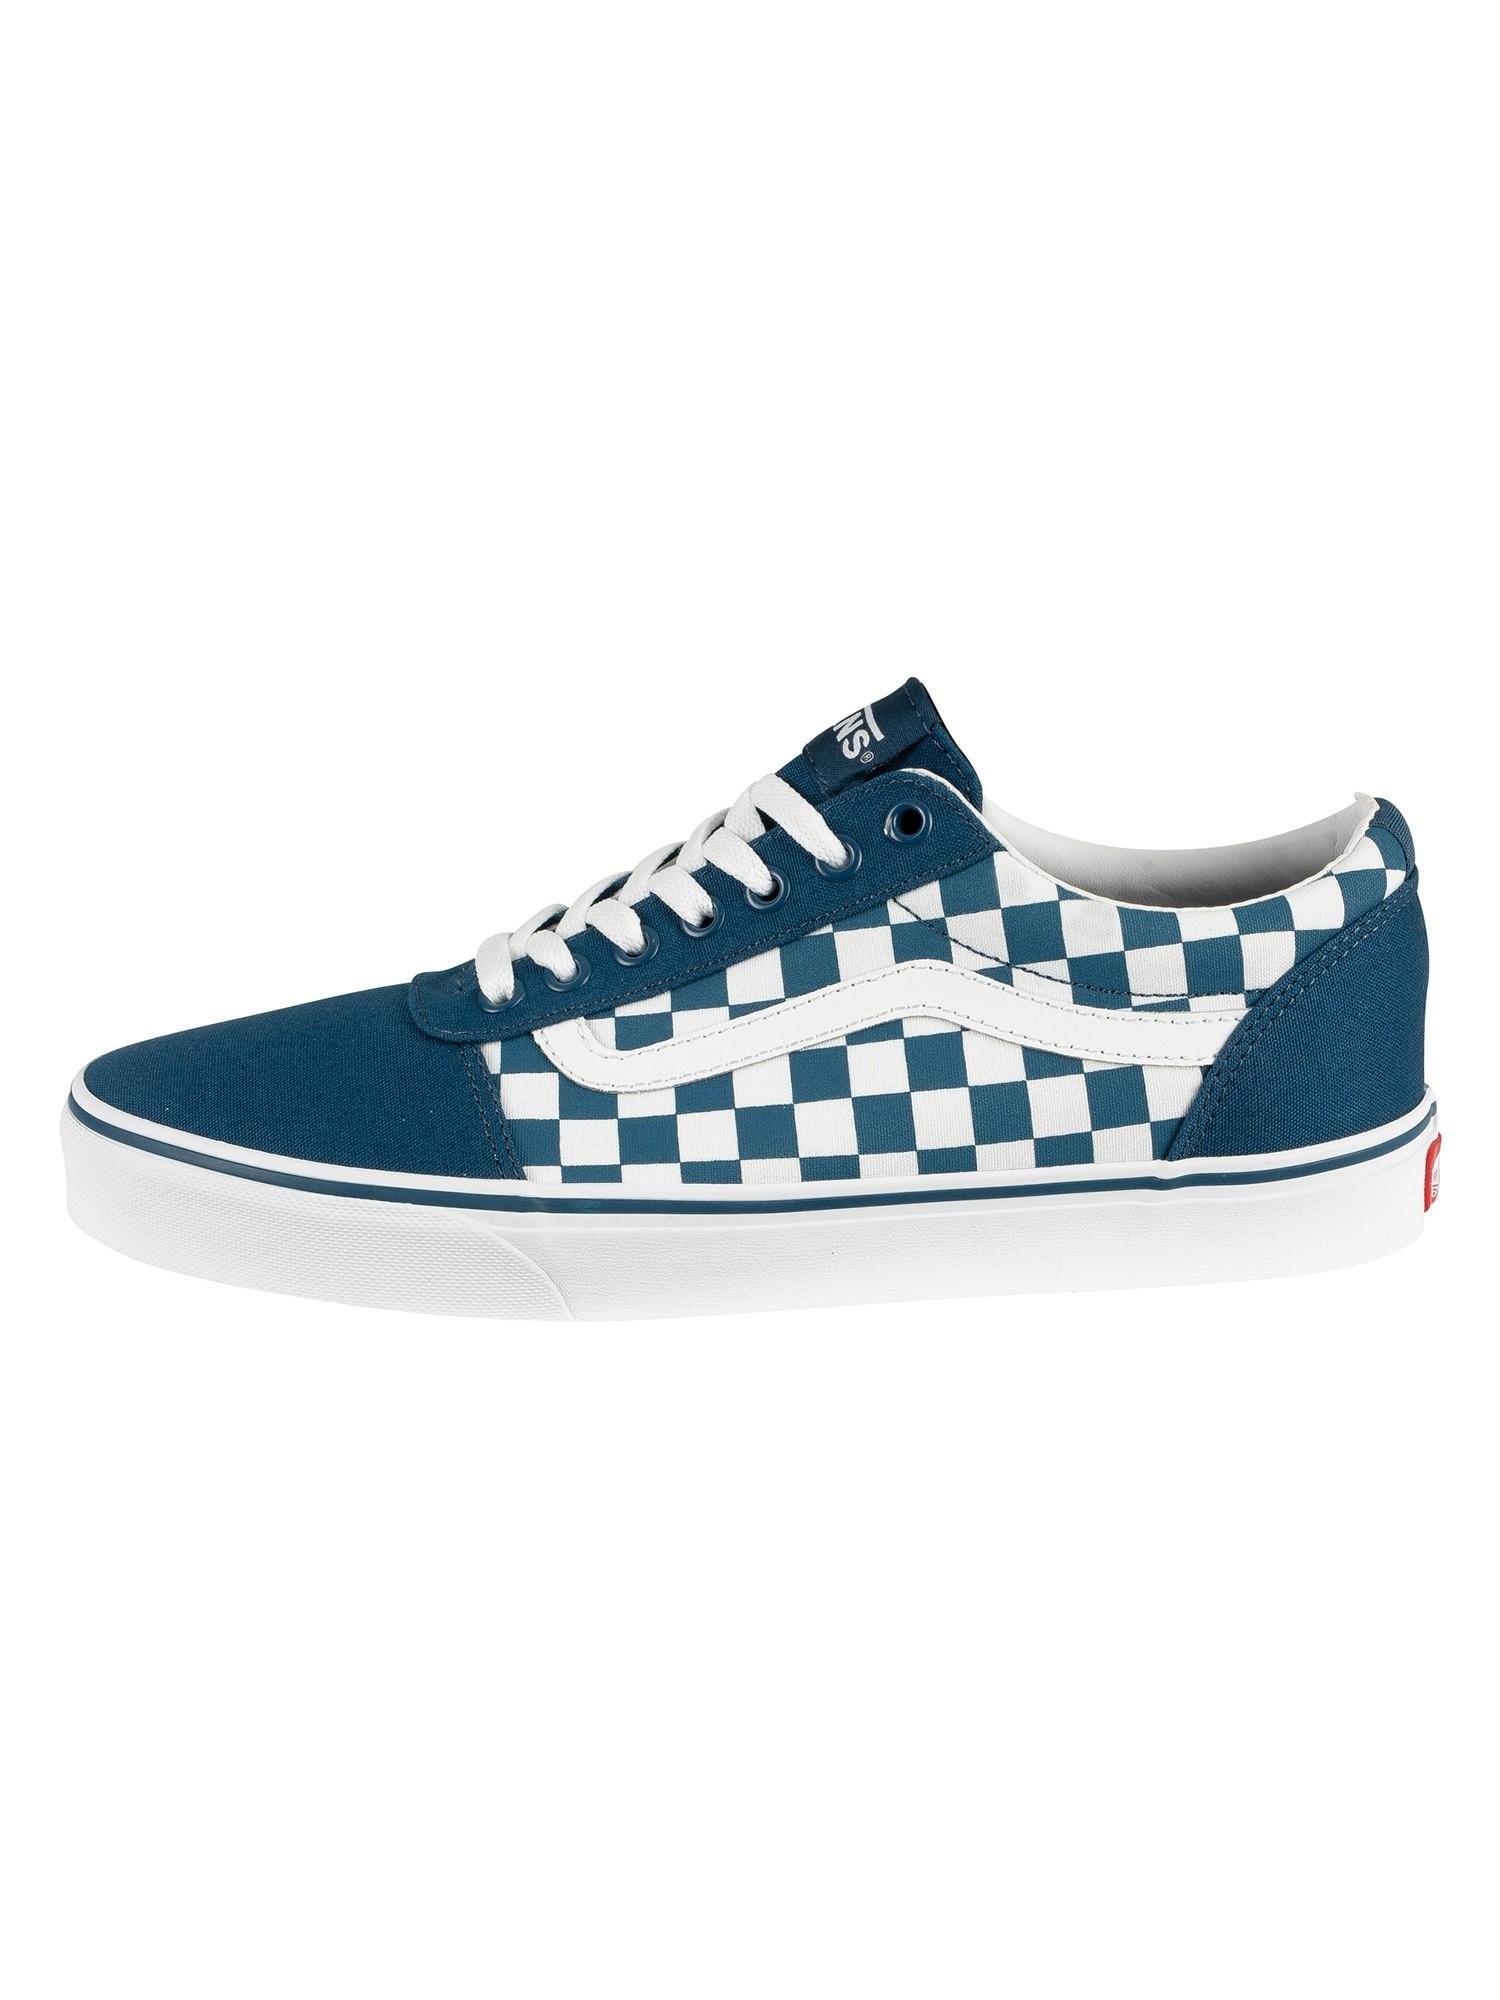 blue checkerboard vans